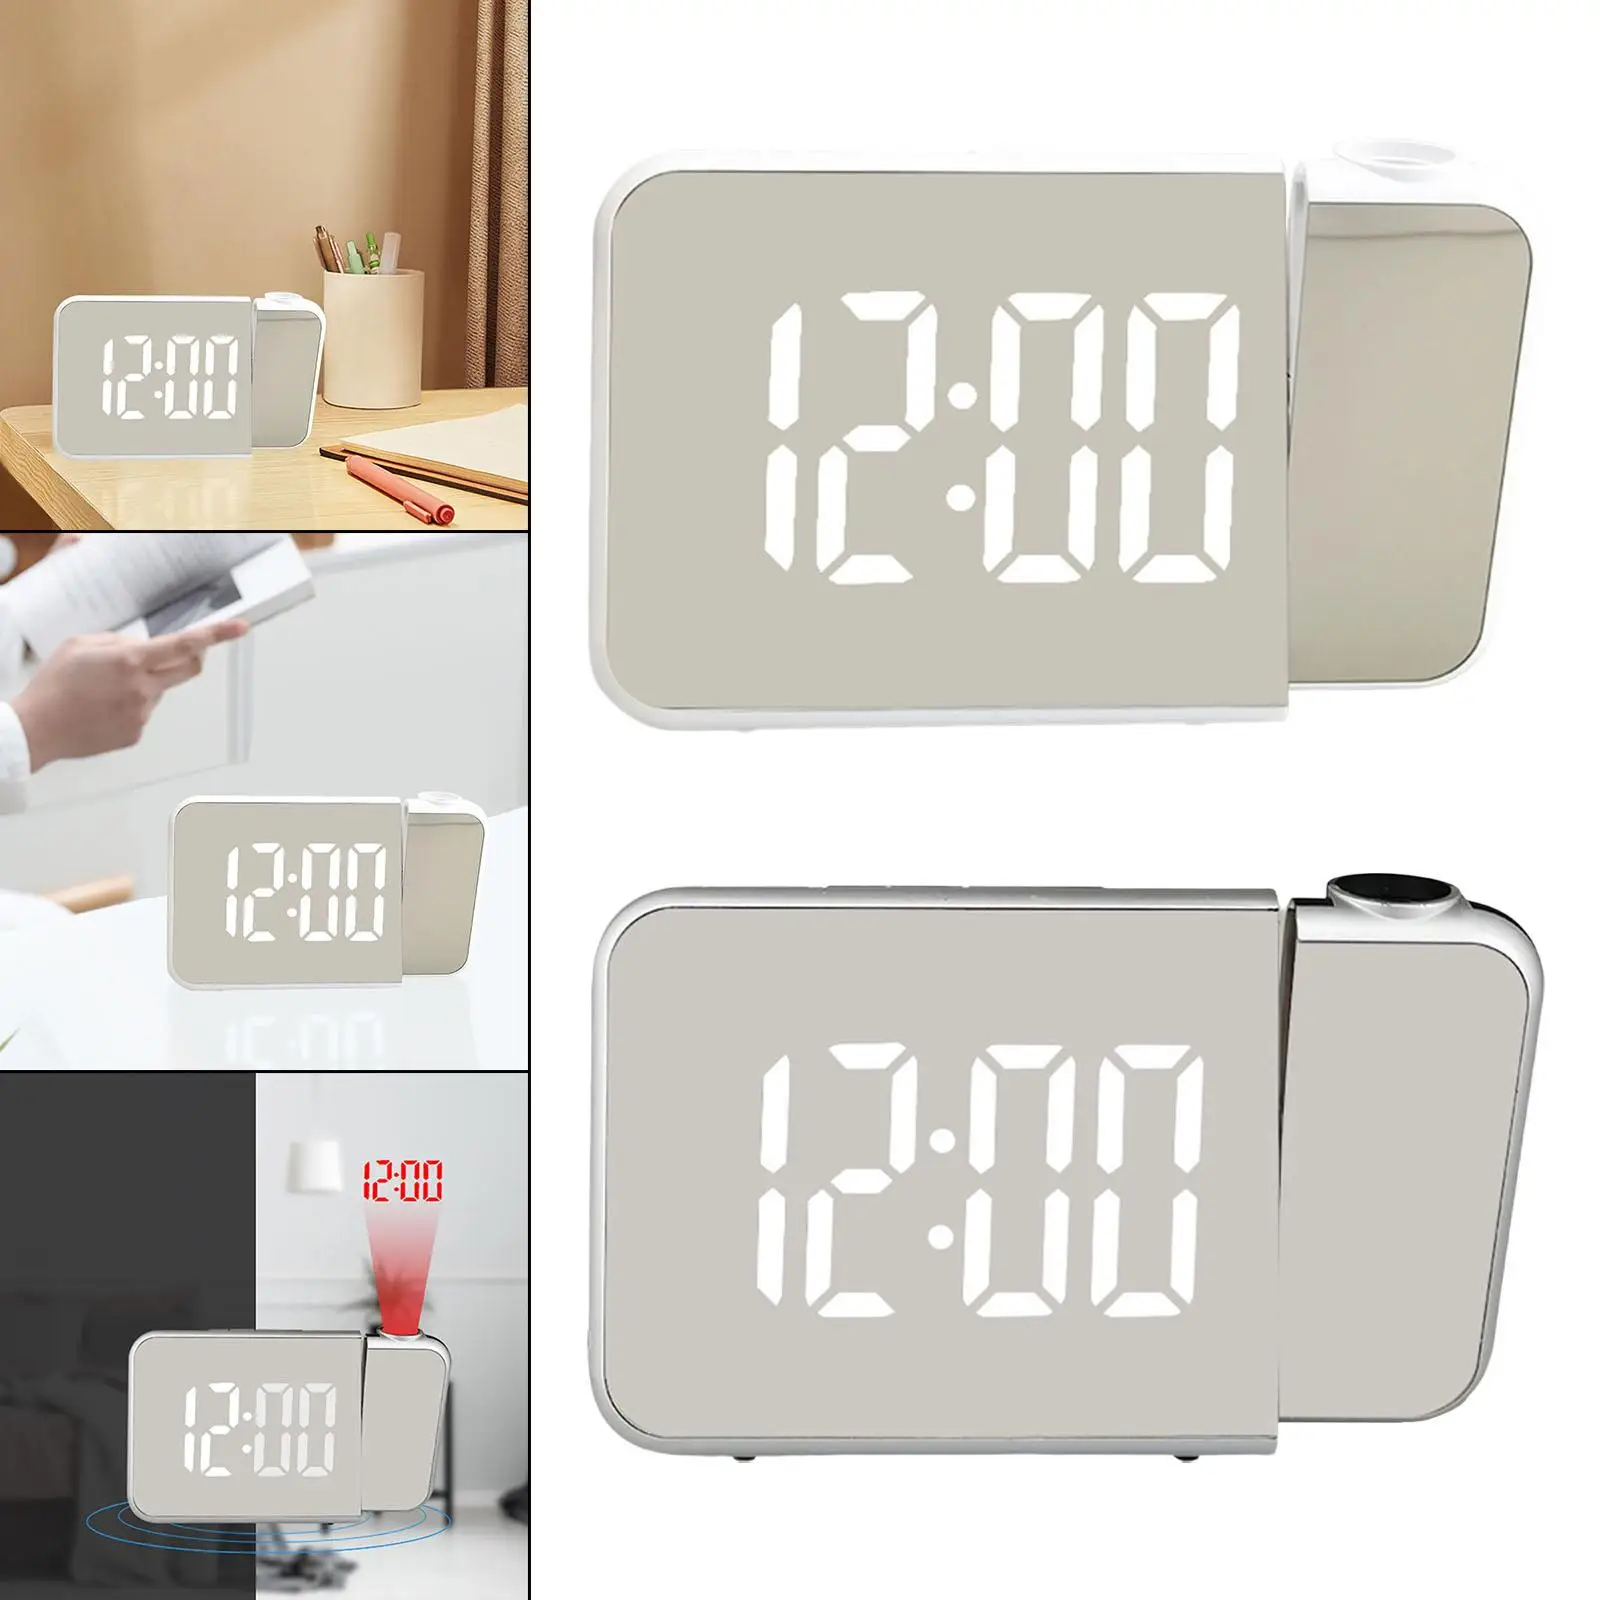 LED Digitl Projection lrm Clock Electronic lrm Clock with Projection Time Projector Bedroom Bedside Clock